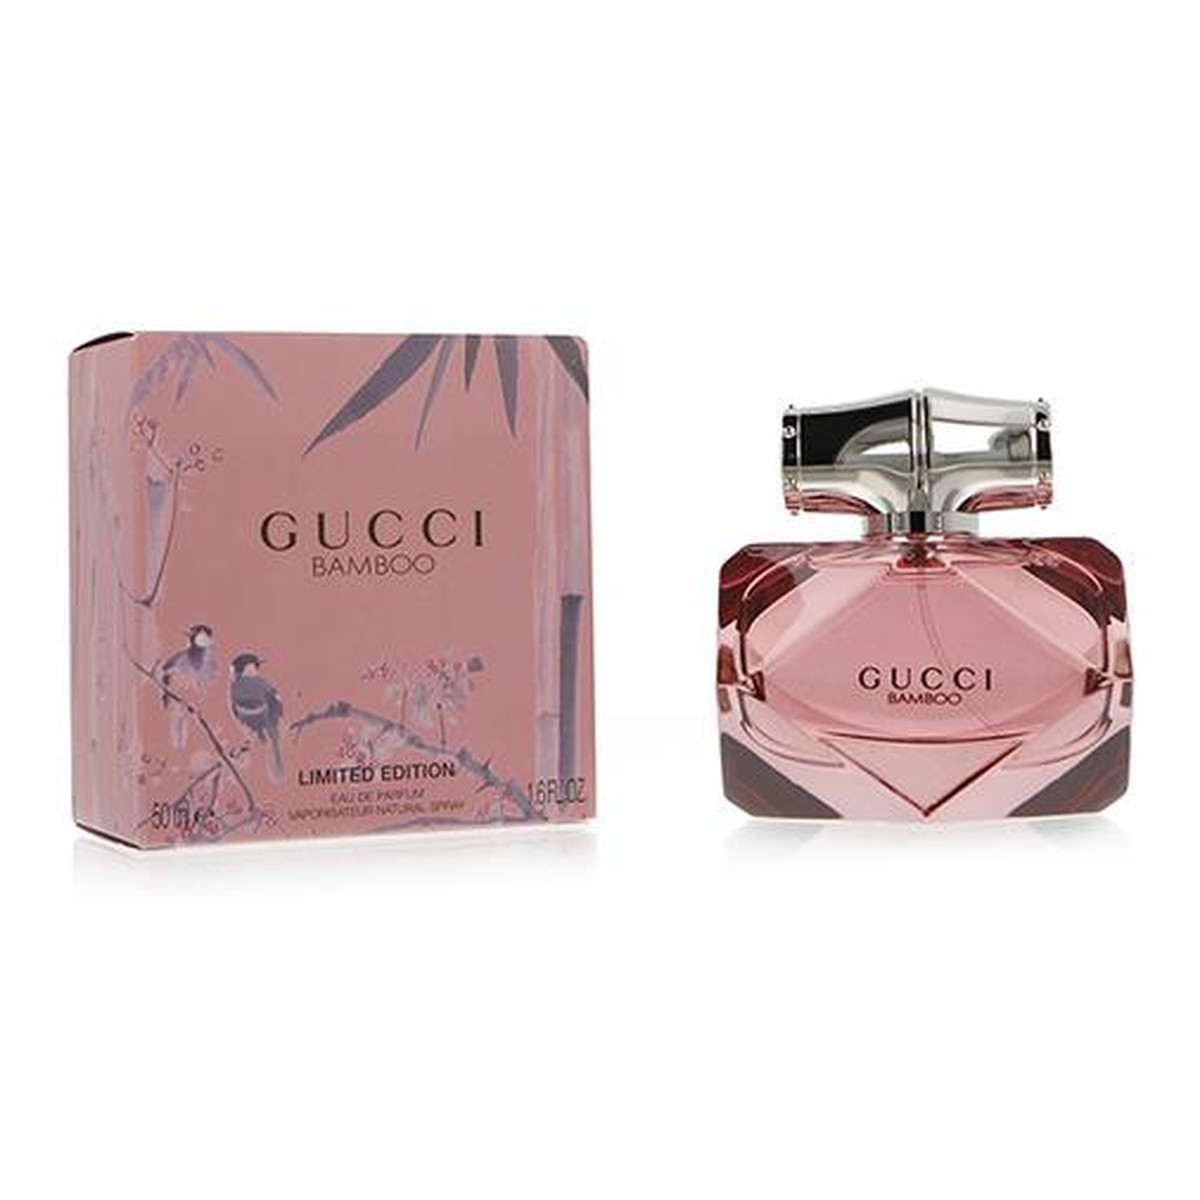 Gucci Bamboo Limited Edition woda perfumowana spray 50ml